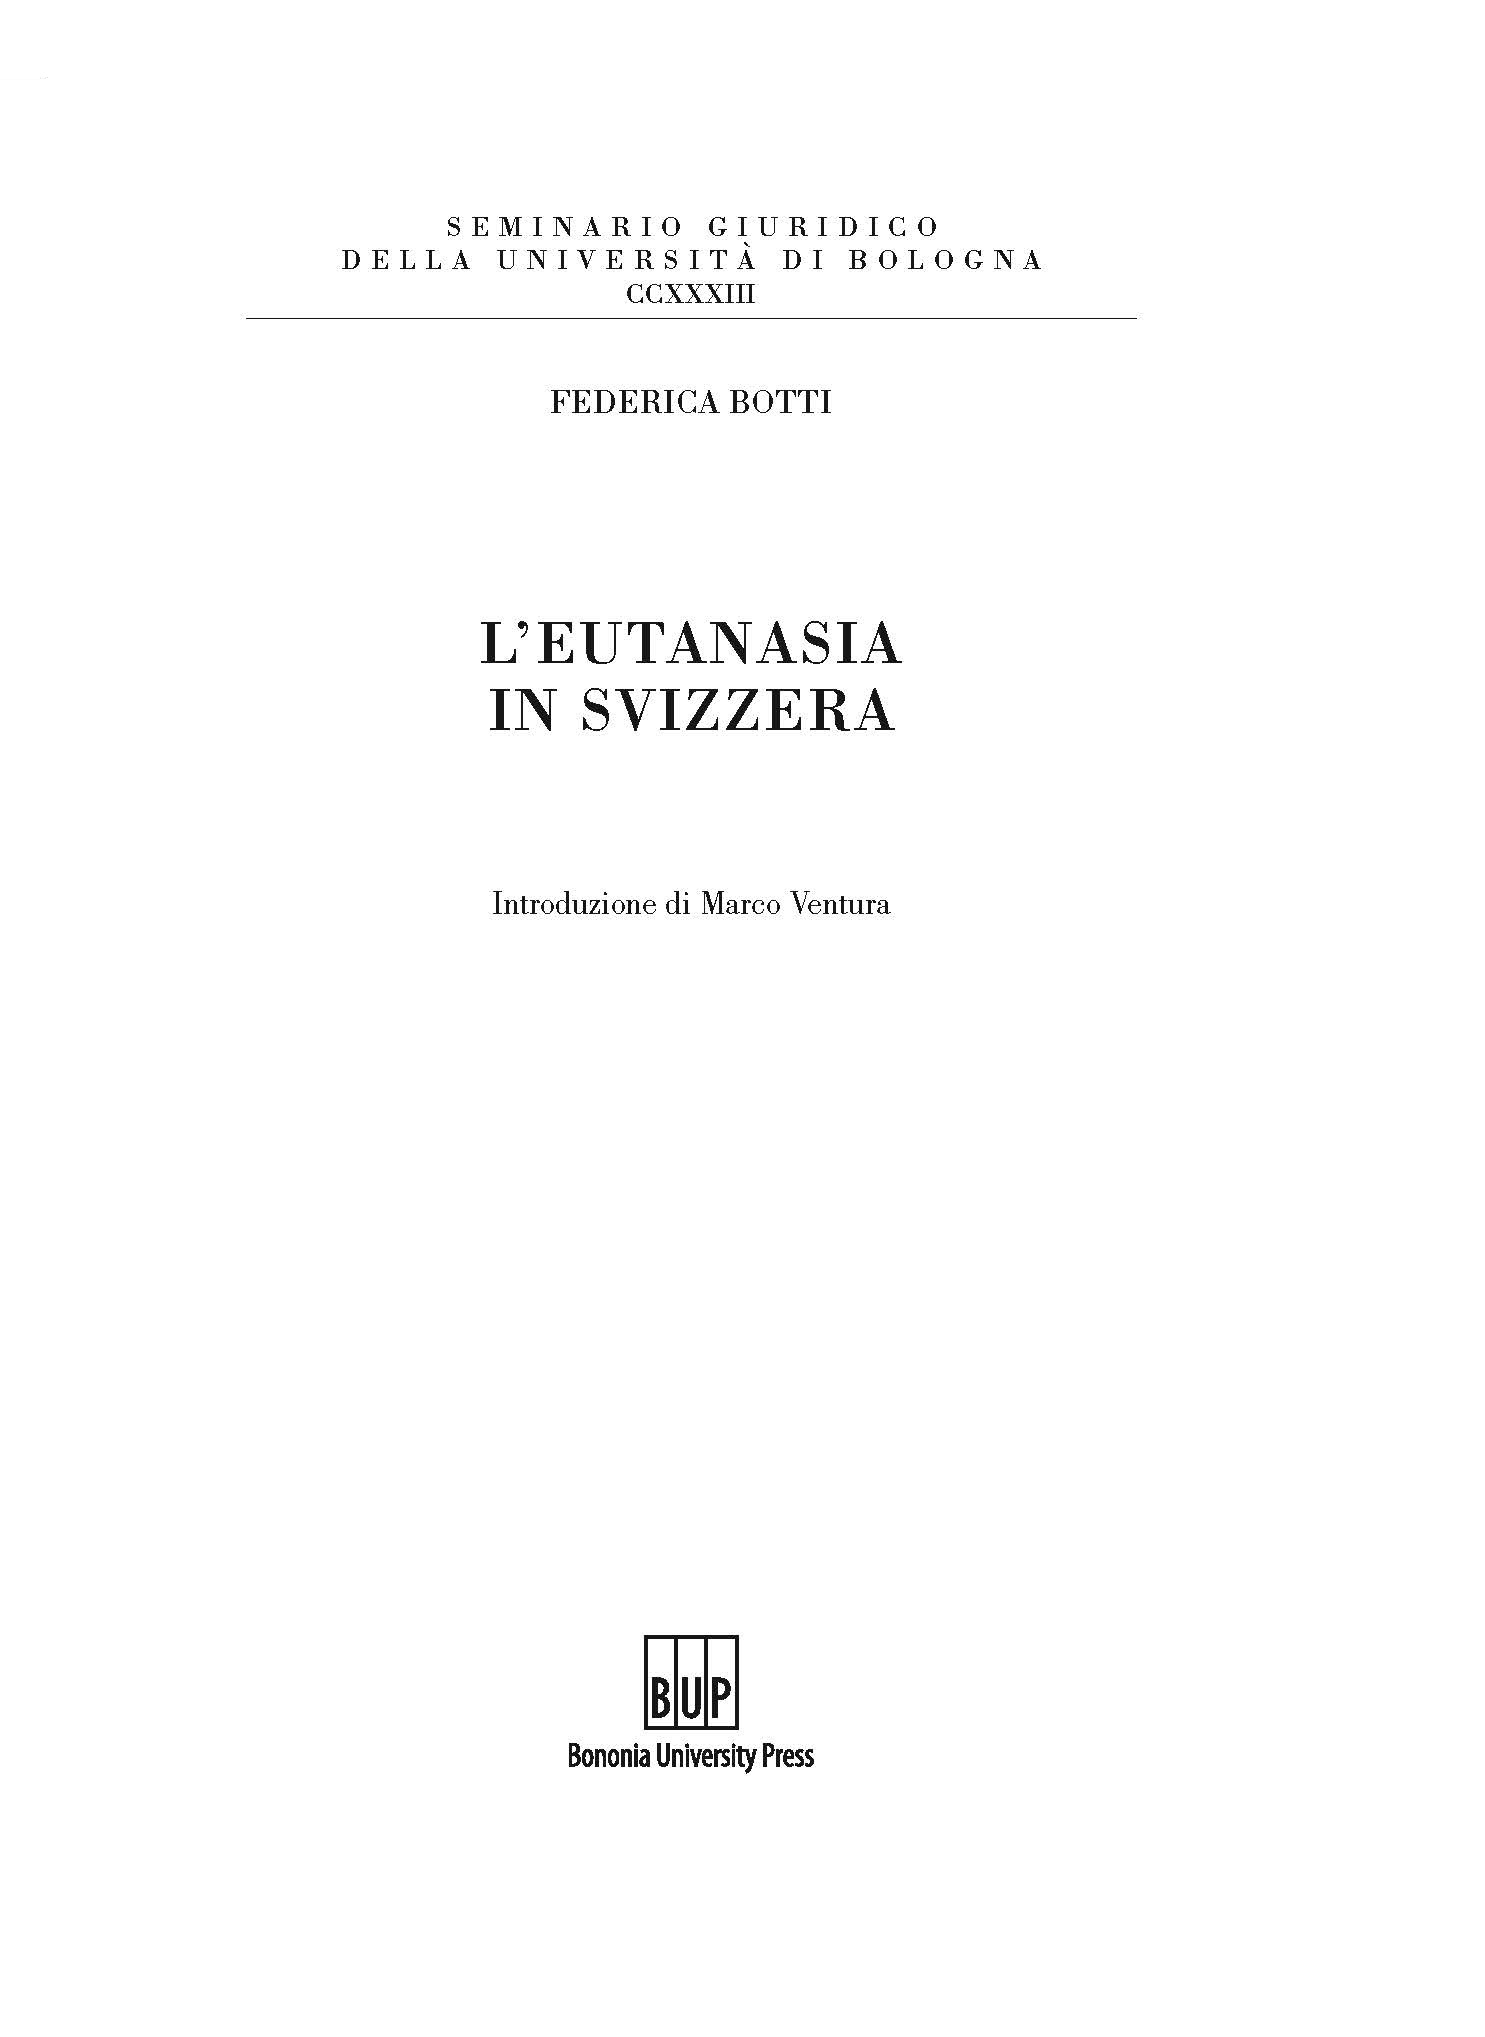 L'Eutanasia in Svizzera - Bologna University Press